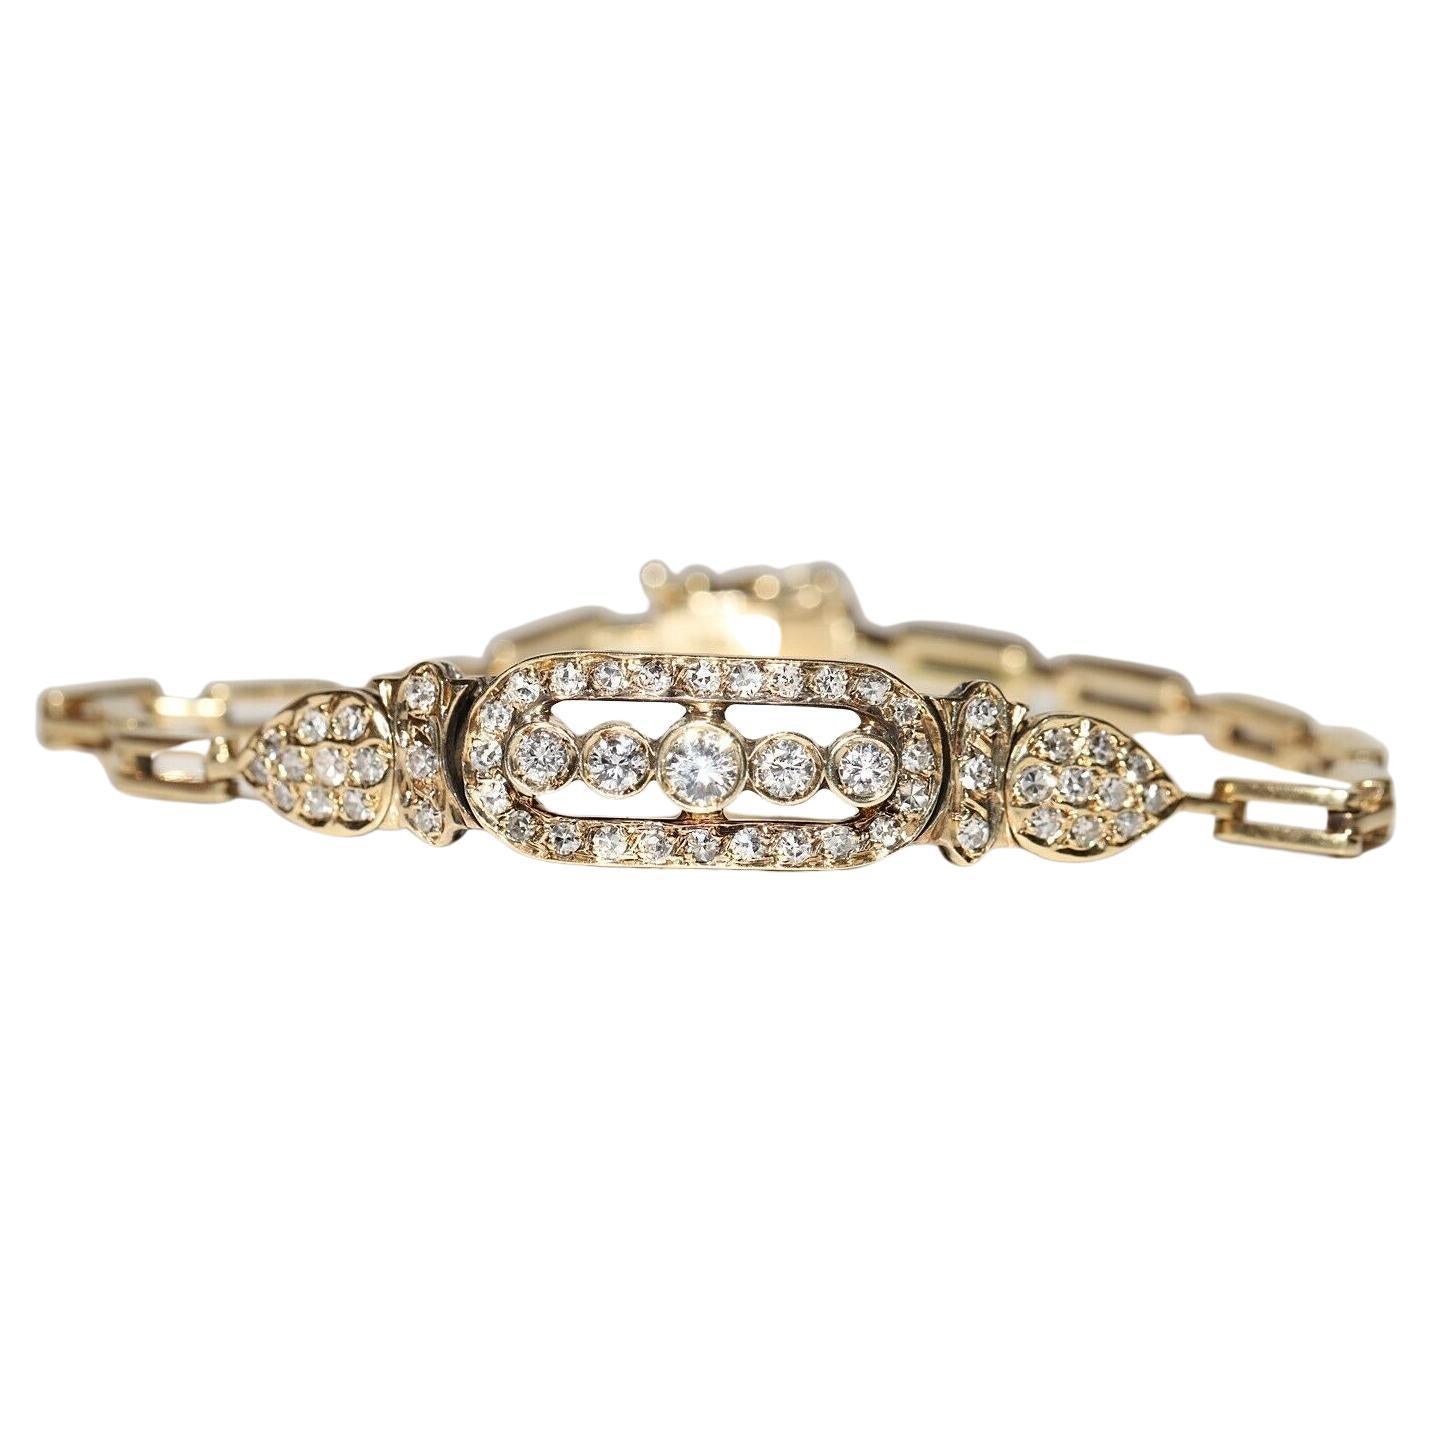 Vintage Circa 1970s 14k Gold Natural Diamond Decorated Bracelet 